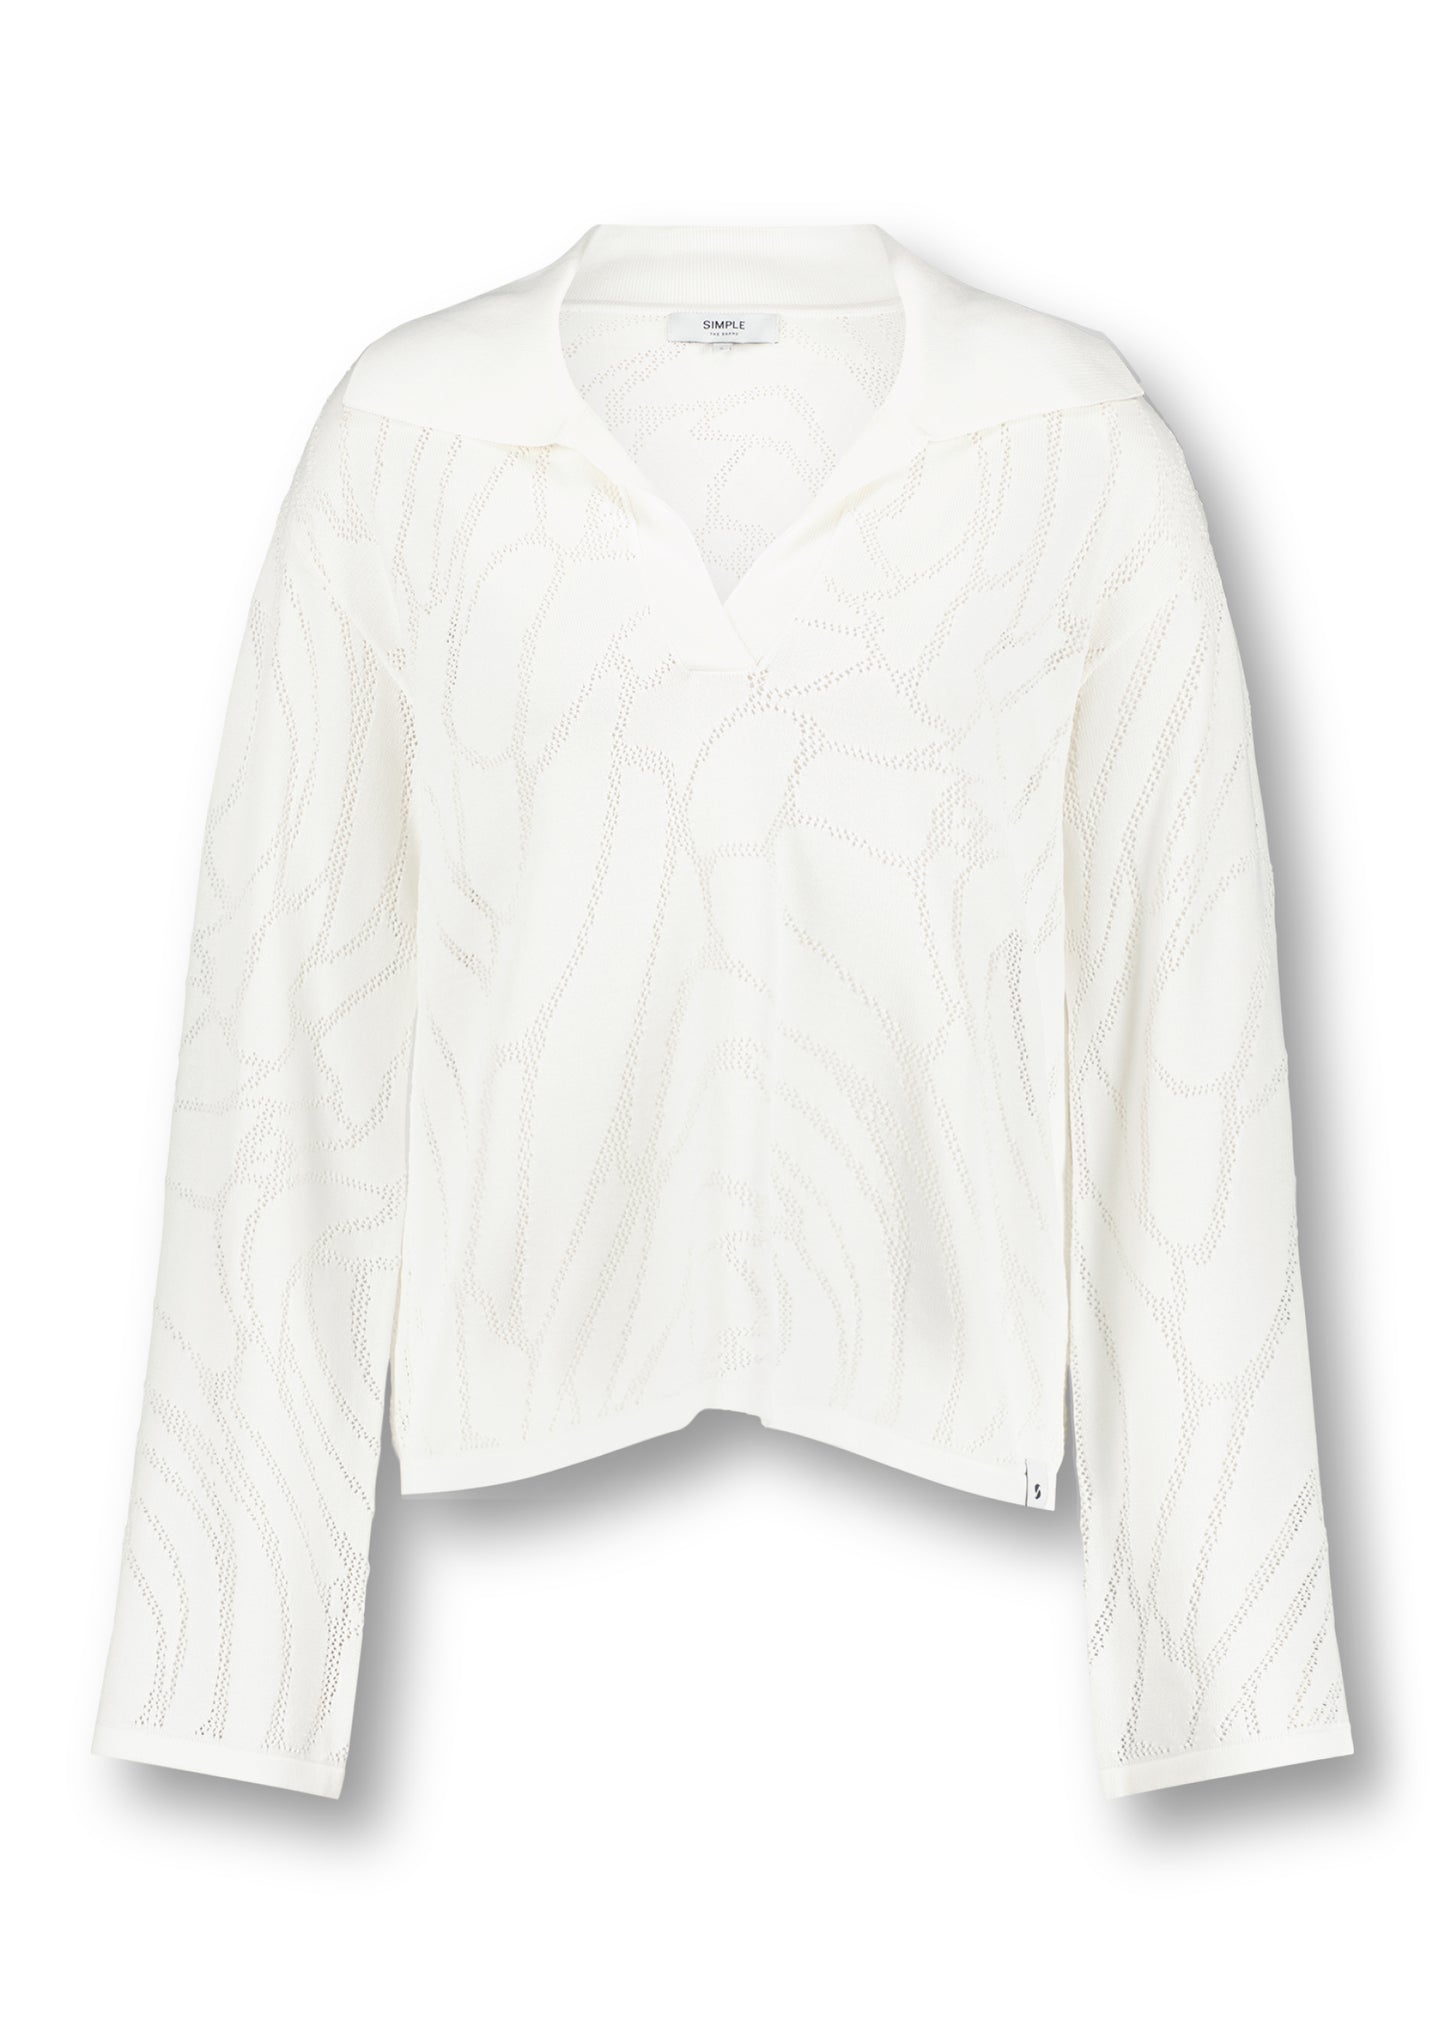 Carly Top - White - Packshot - Shirts - Simple